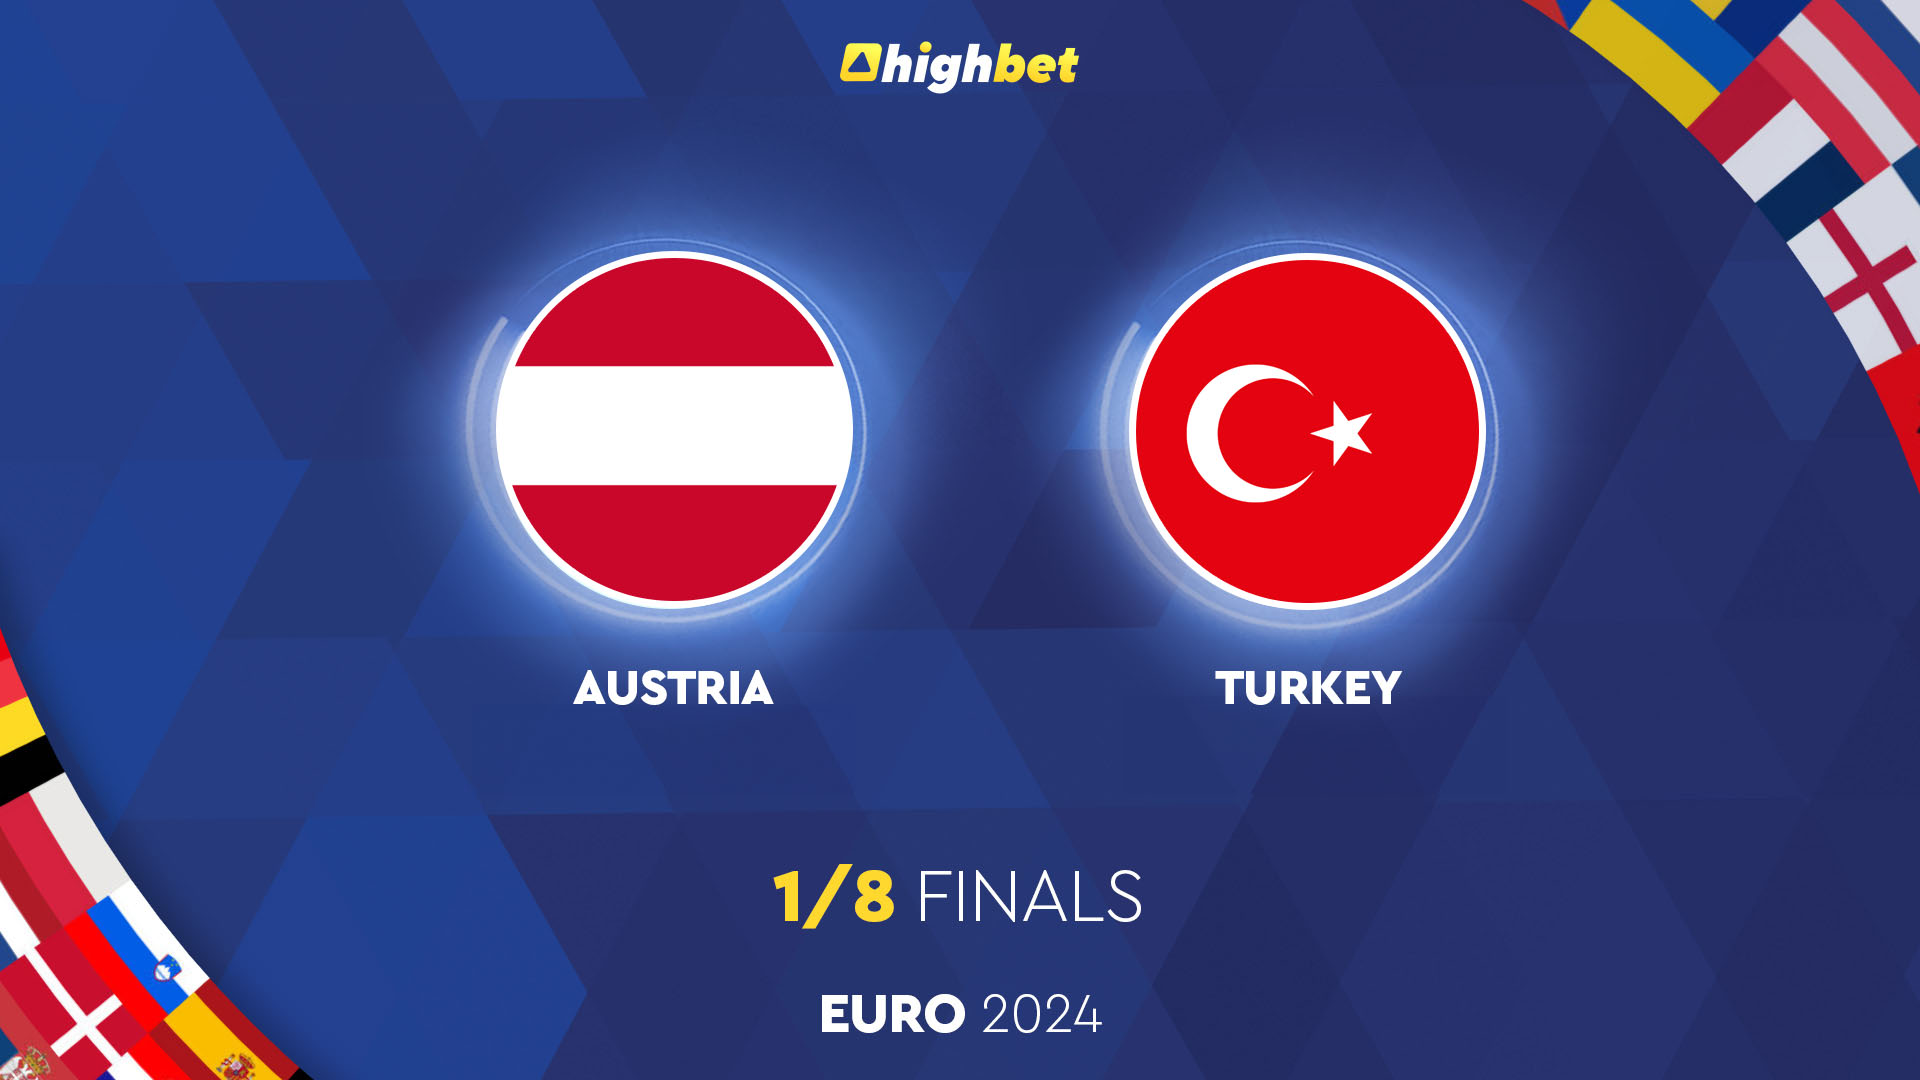 Austria vs Turkey - Euro 2024 - HighBet Blog